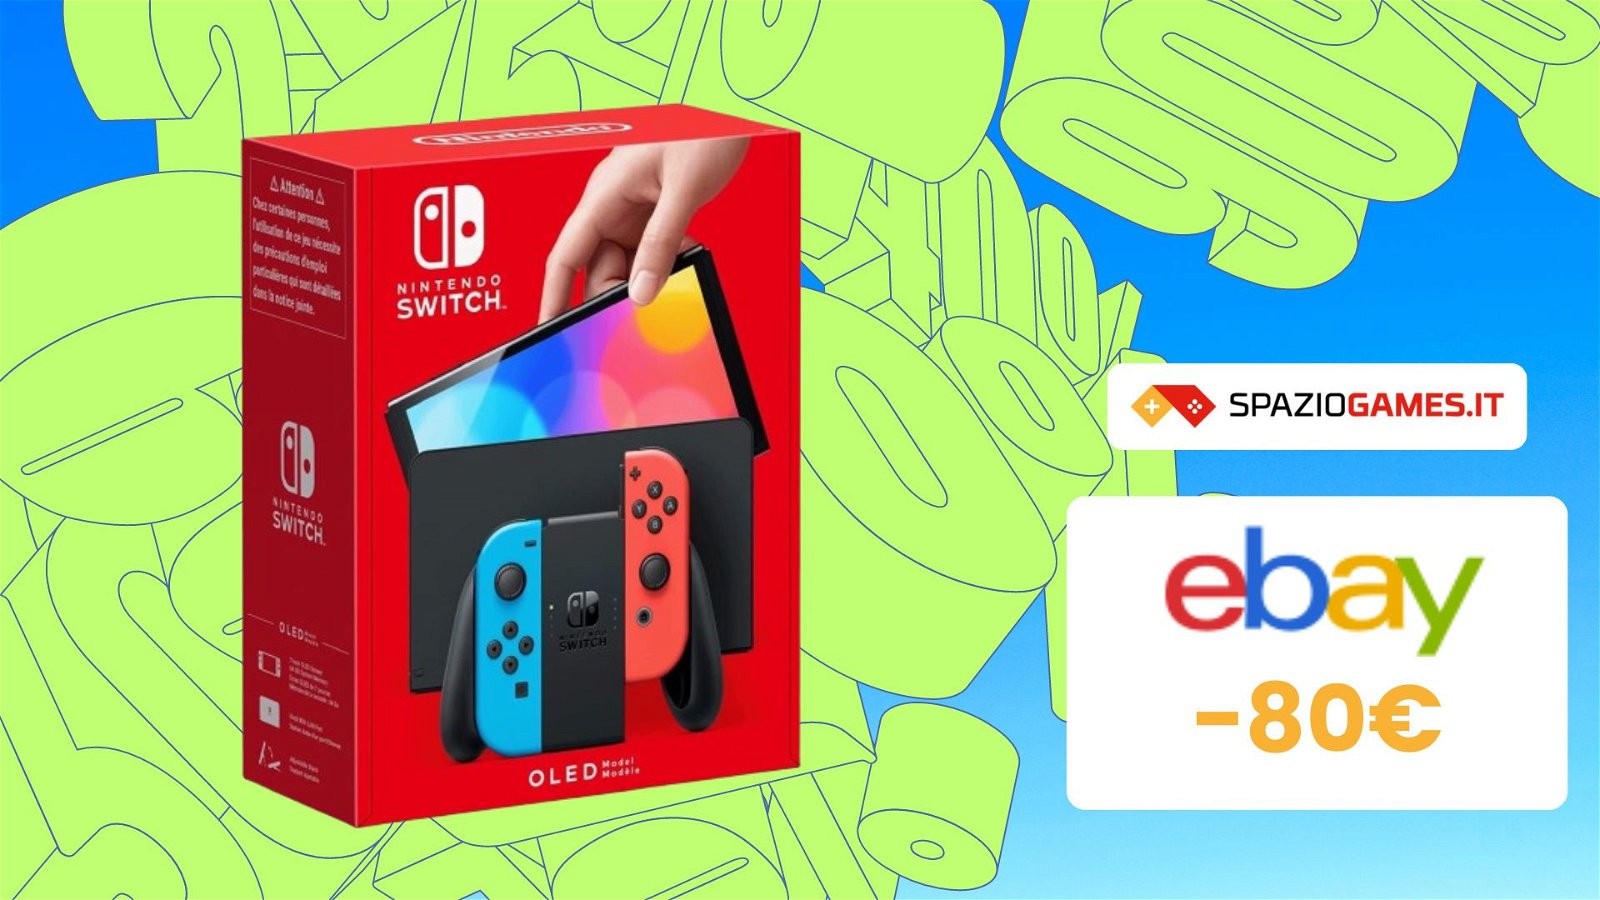 Nintendo Switch OLED al MINIMO STORICO! -80€